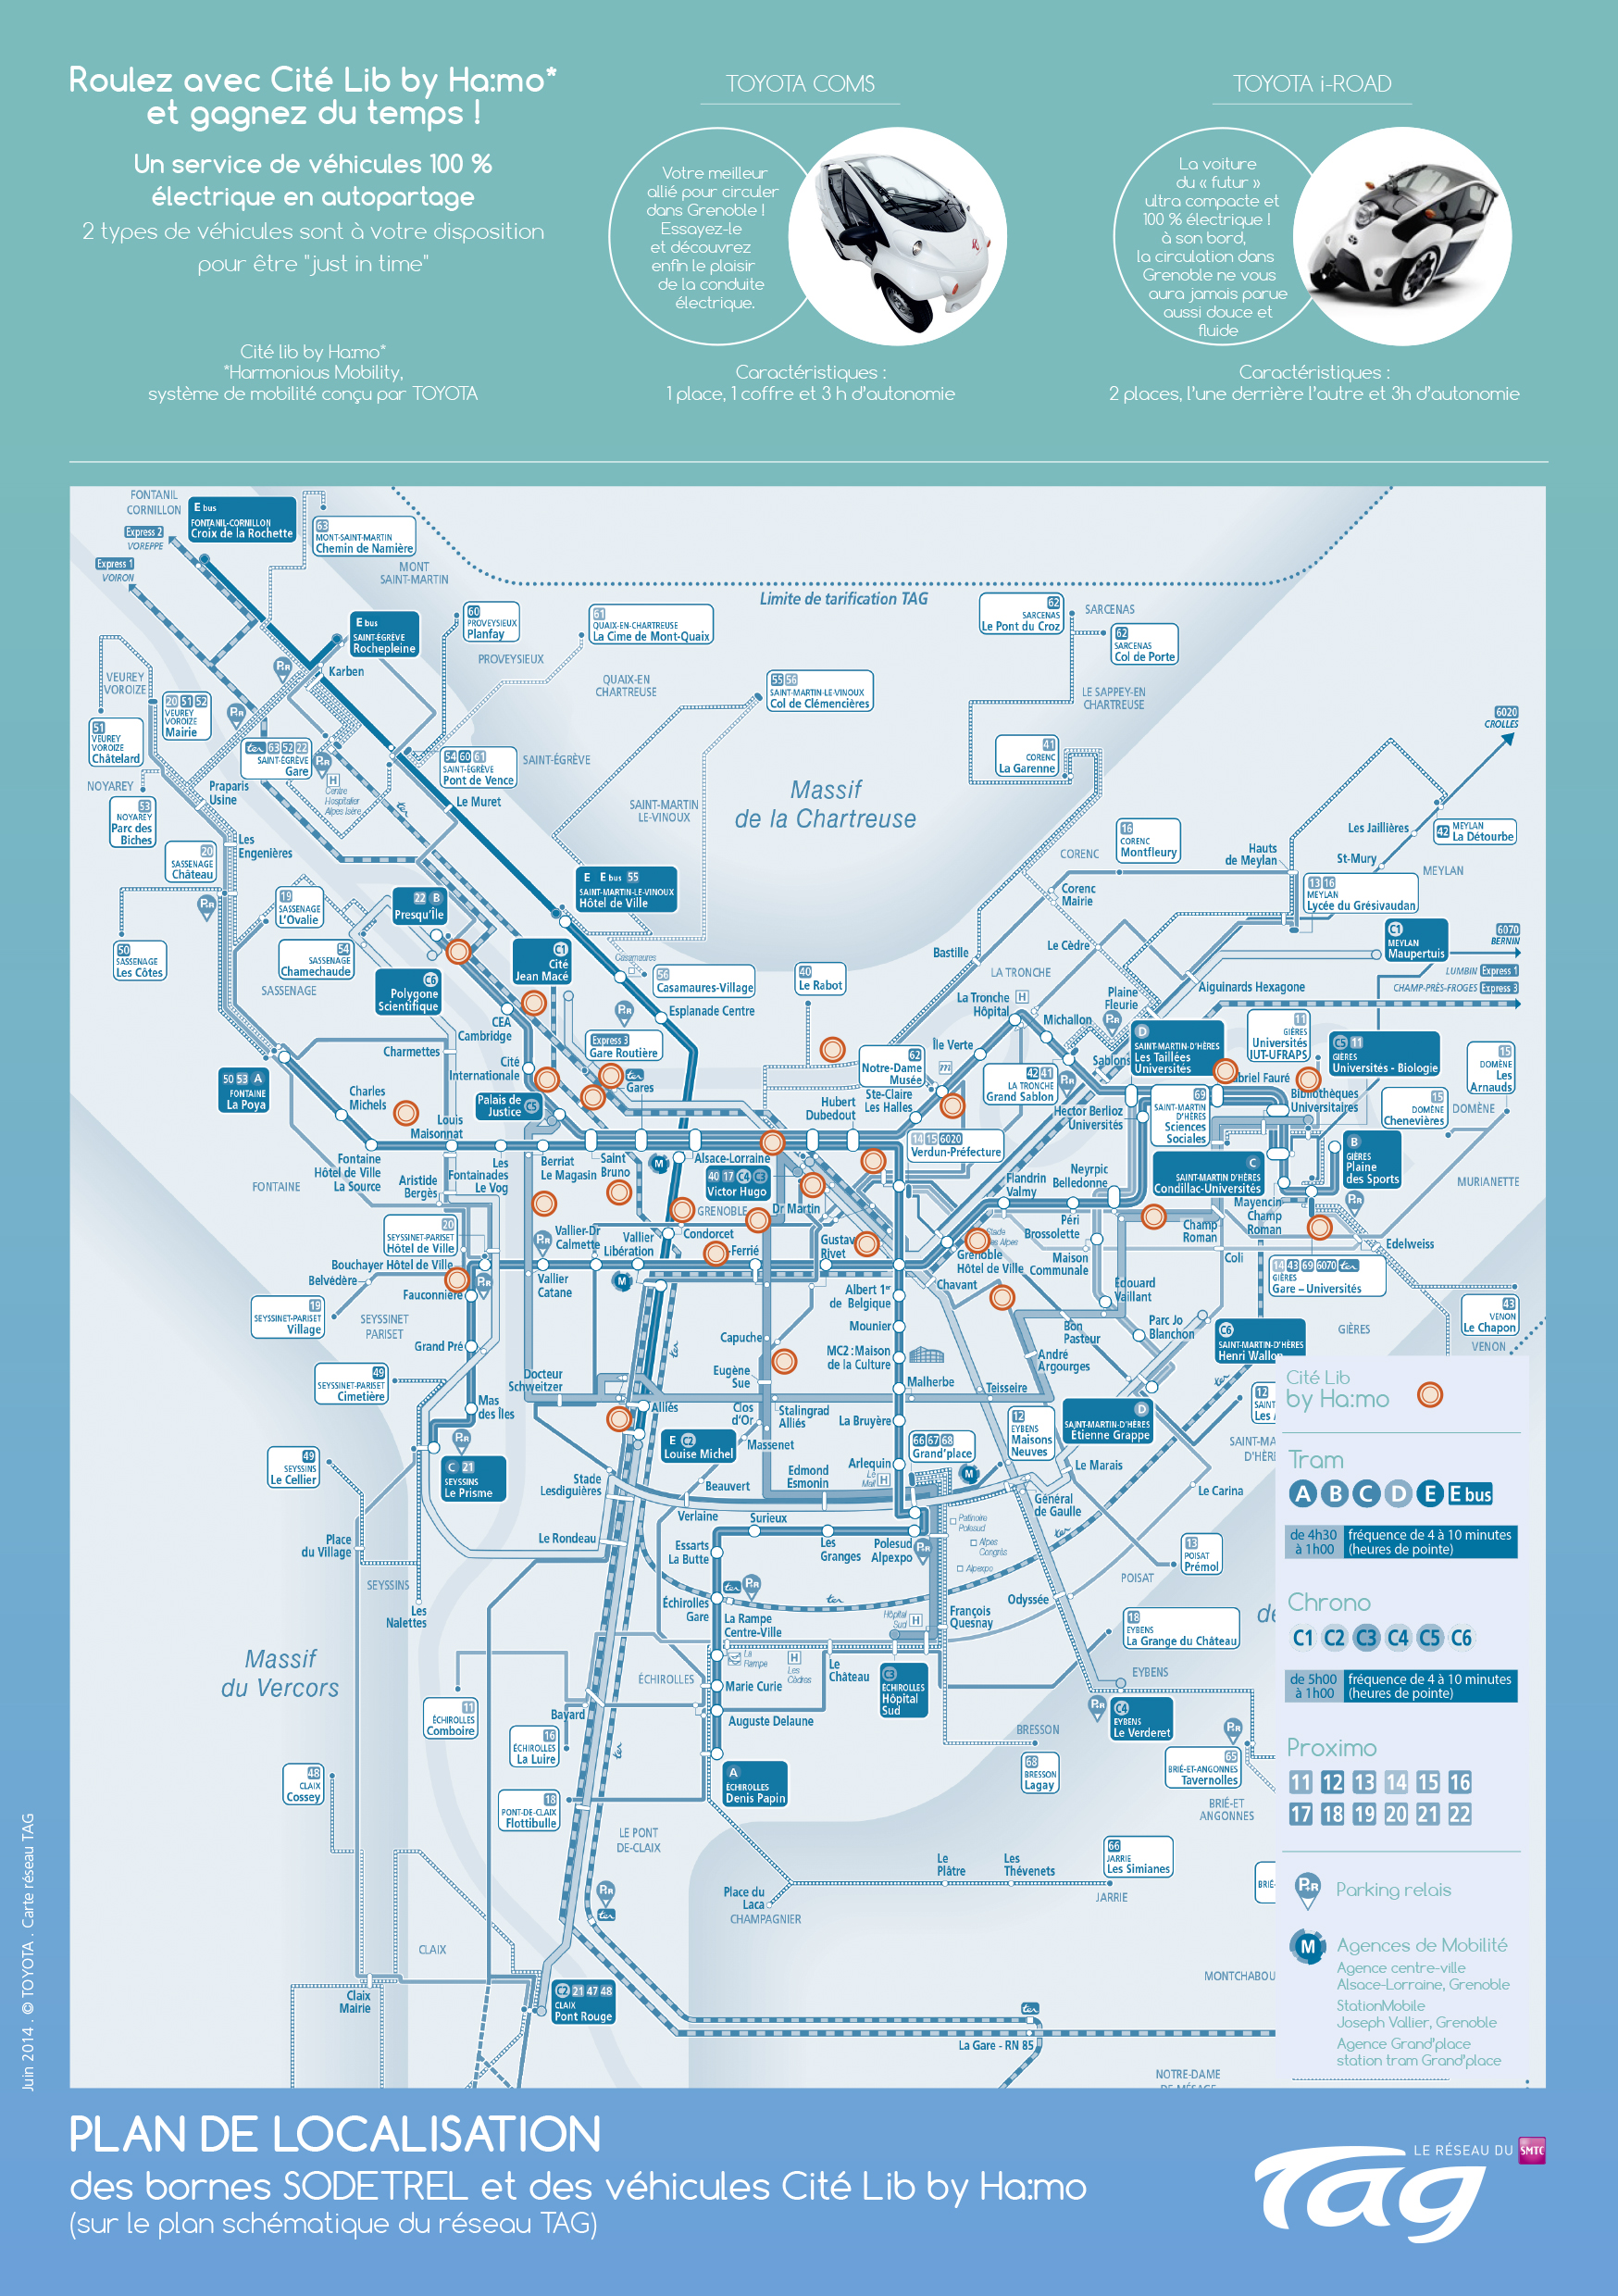 Tentative charging station map brochure for Citélib by Ha:mo